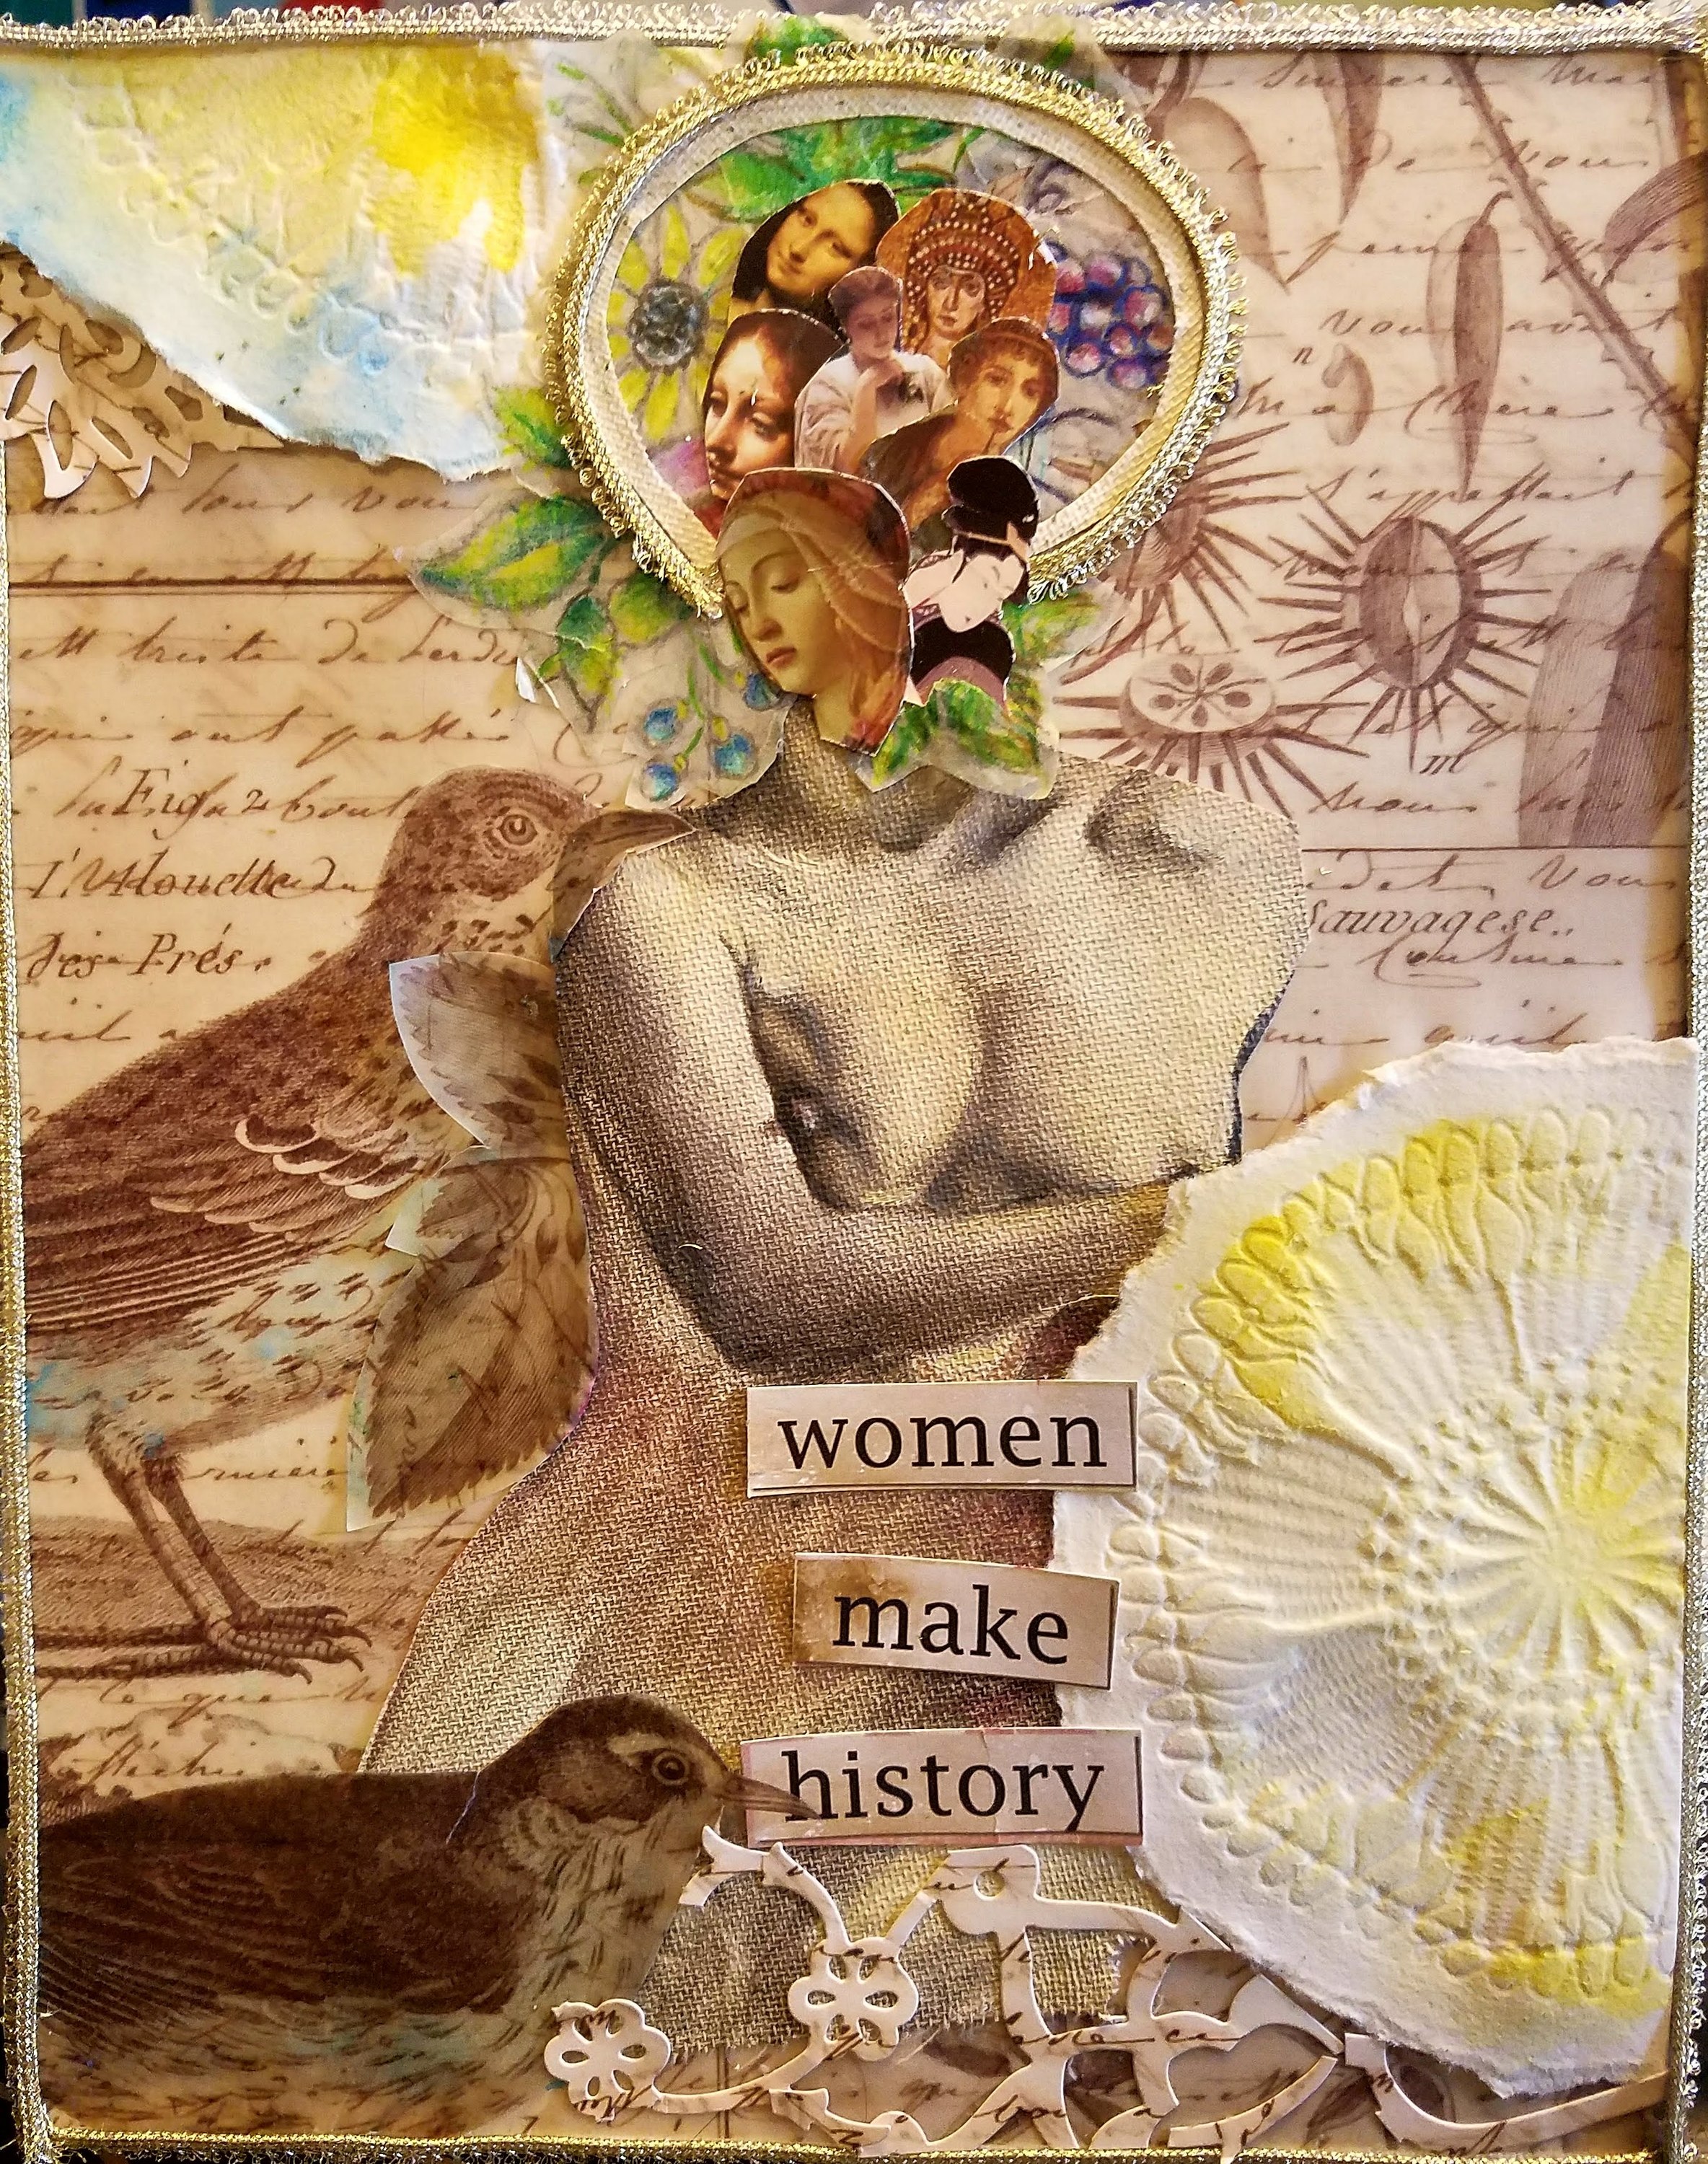 Women make history print tqgits